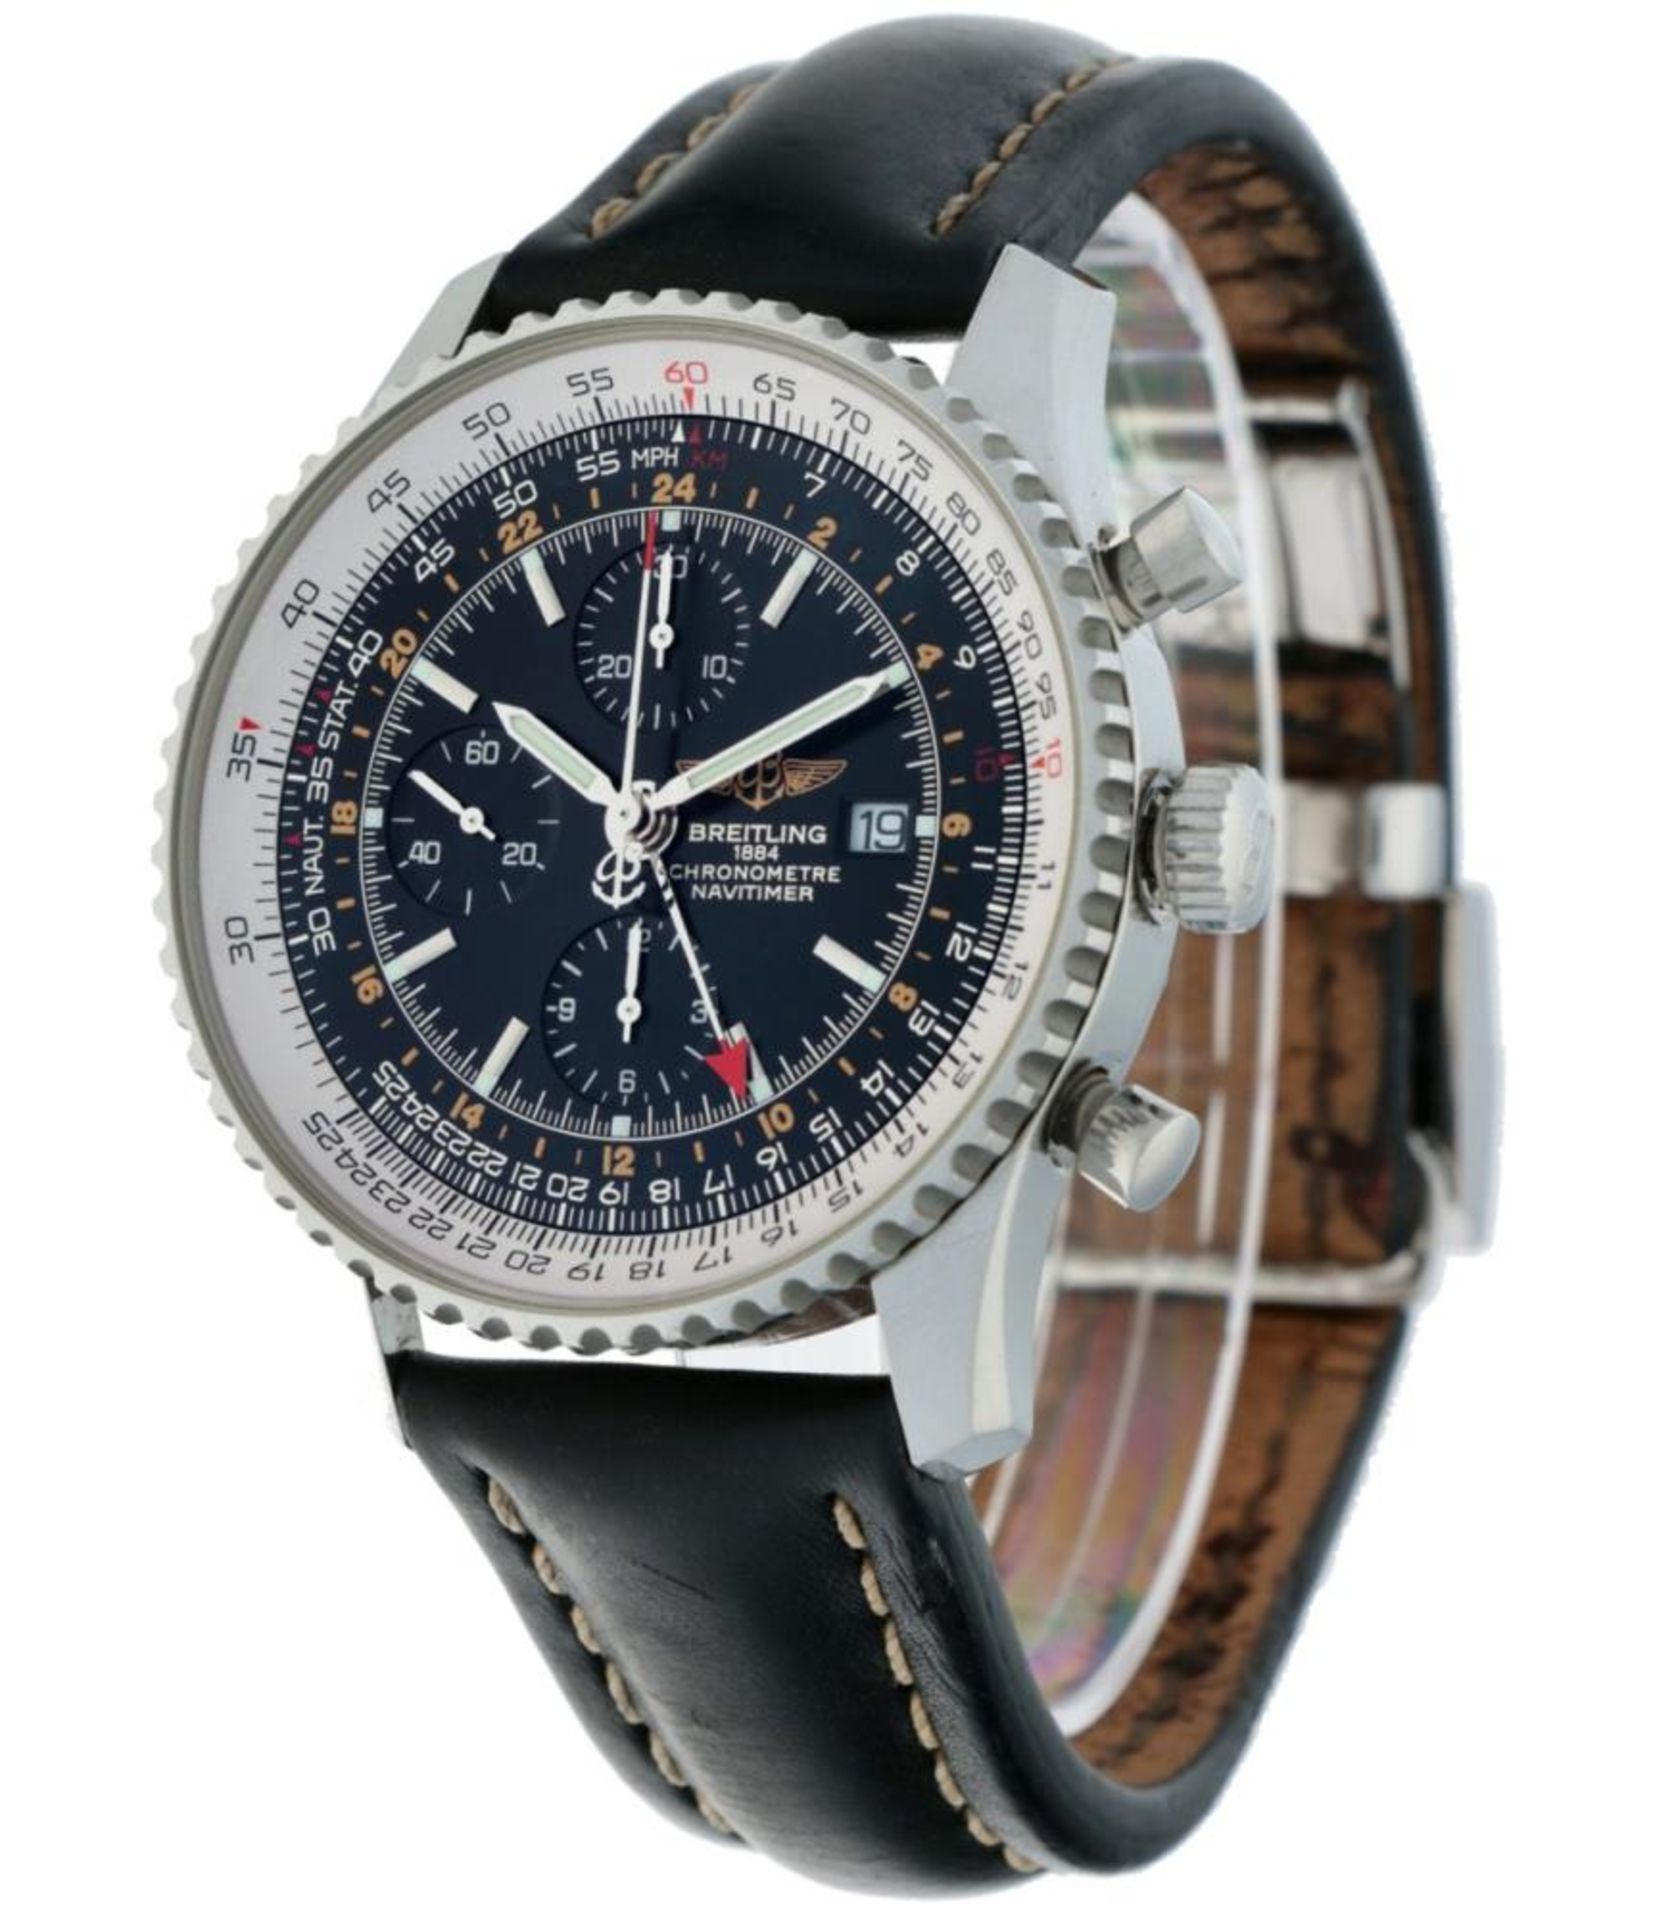 Breitling Navitimer A24322 - Men's watch - 2007. - Image 2 of 6